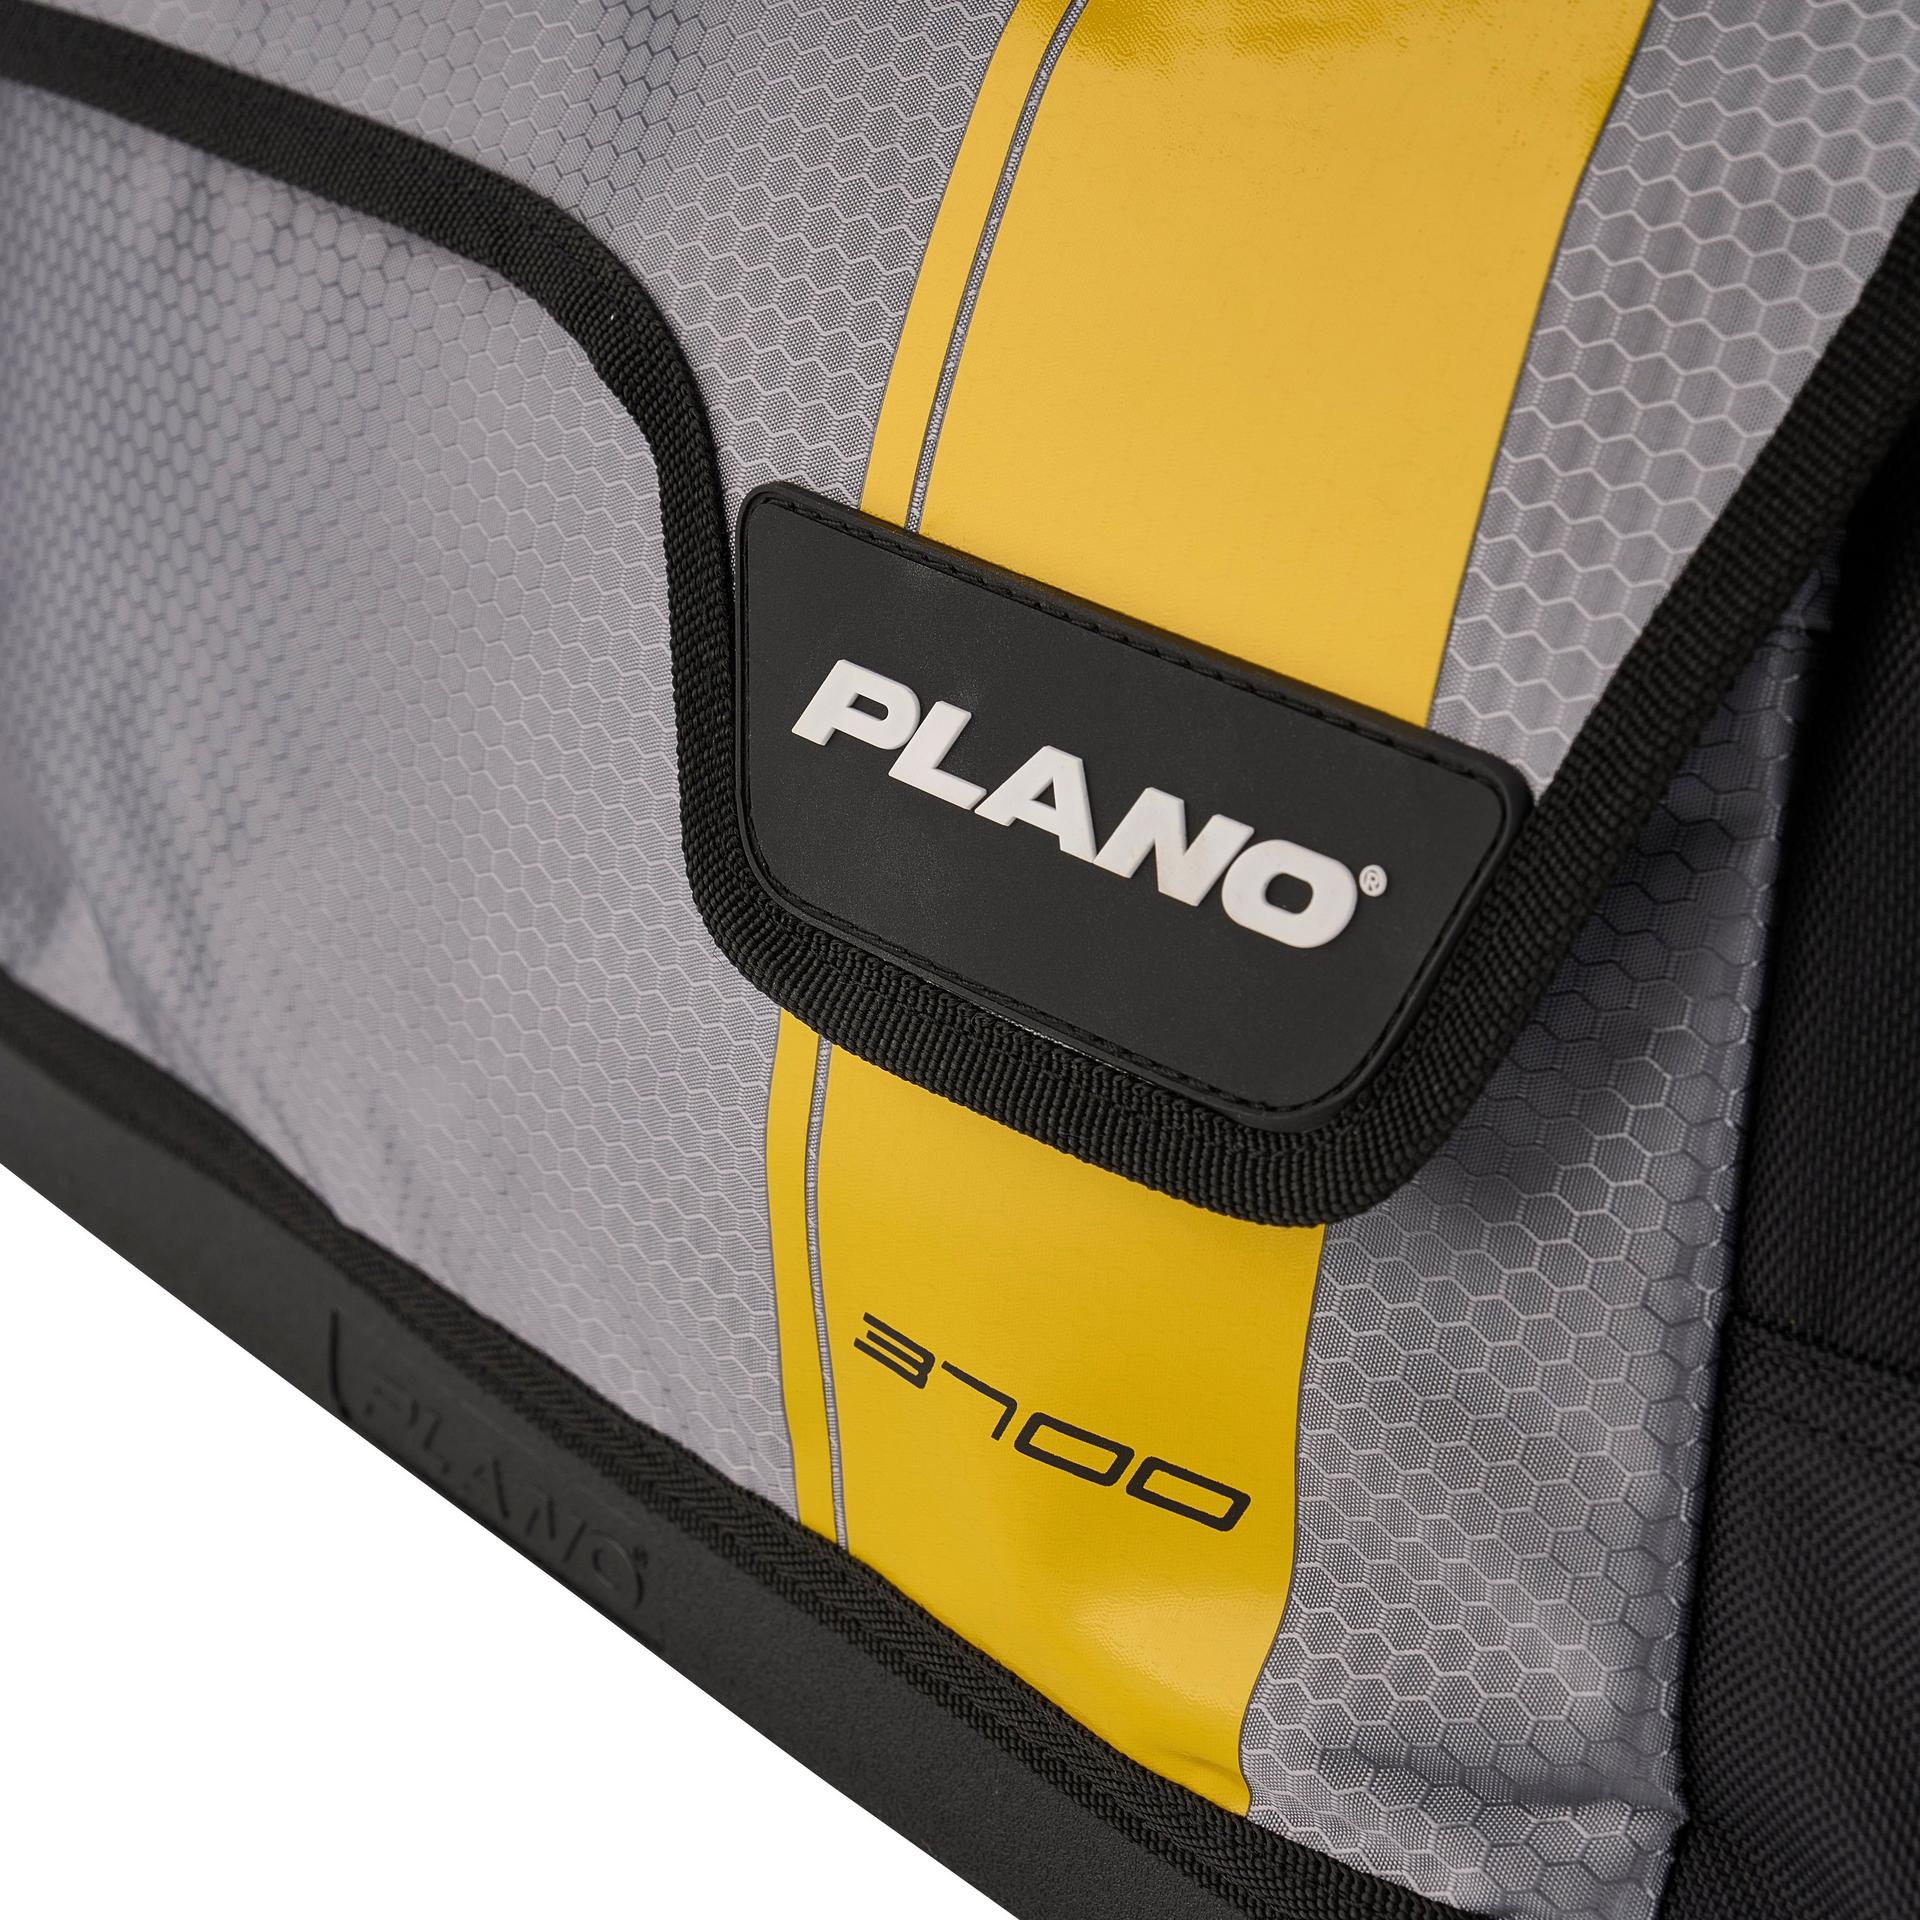 Pro Series Tackle Bag | Plano®